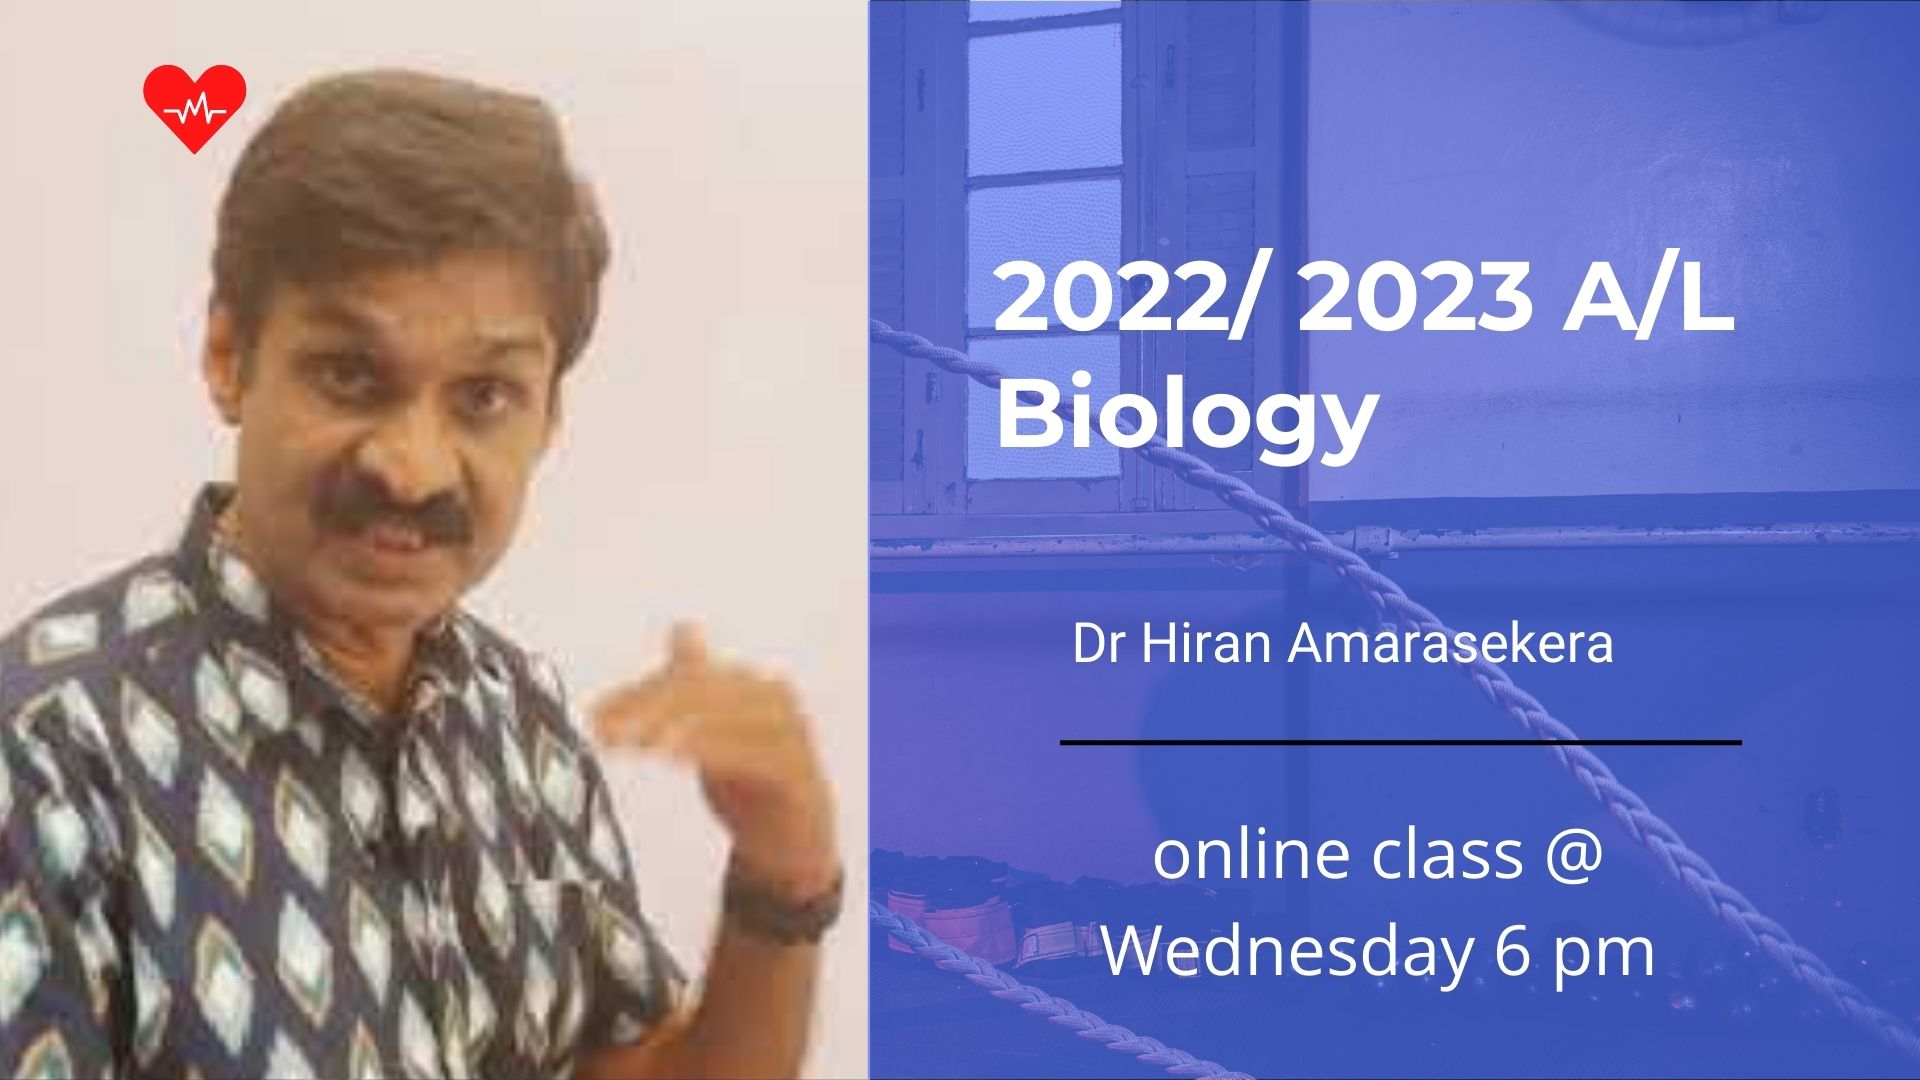 2023 A/L Biology online class by Dr Hiran Amarasekera